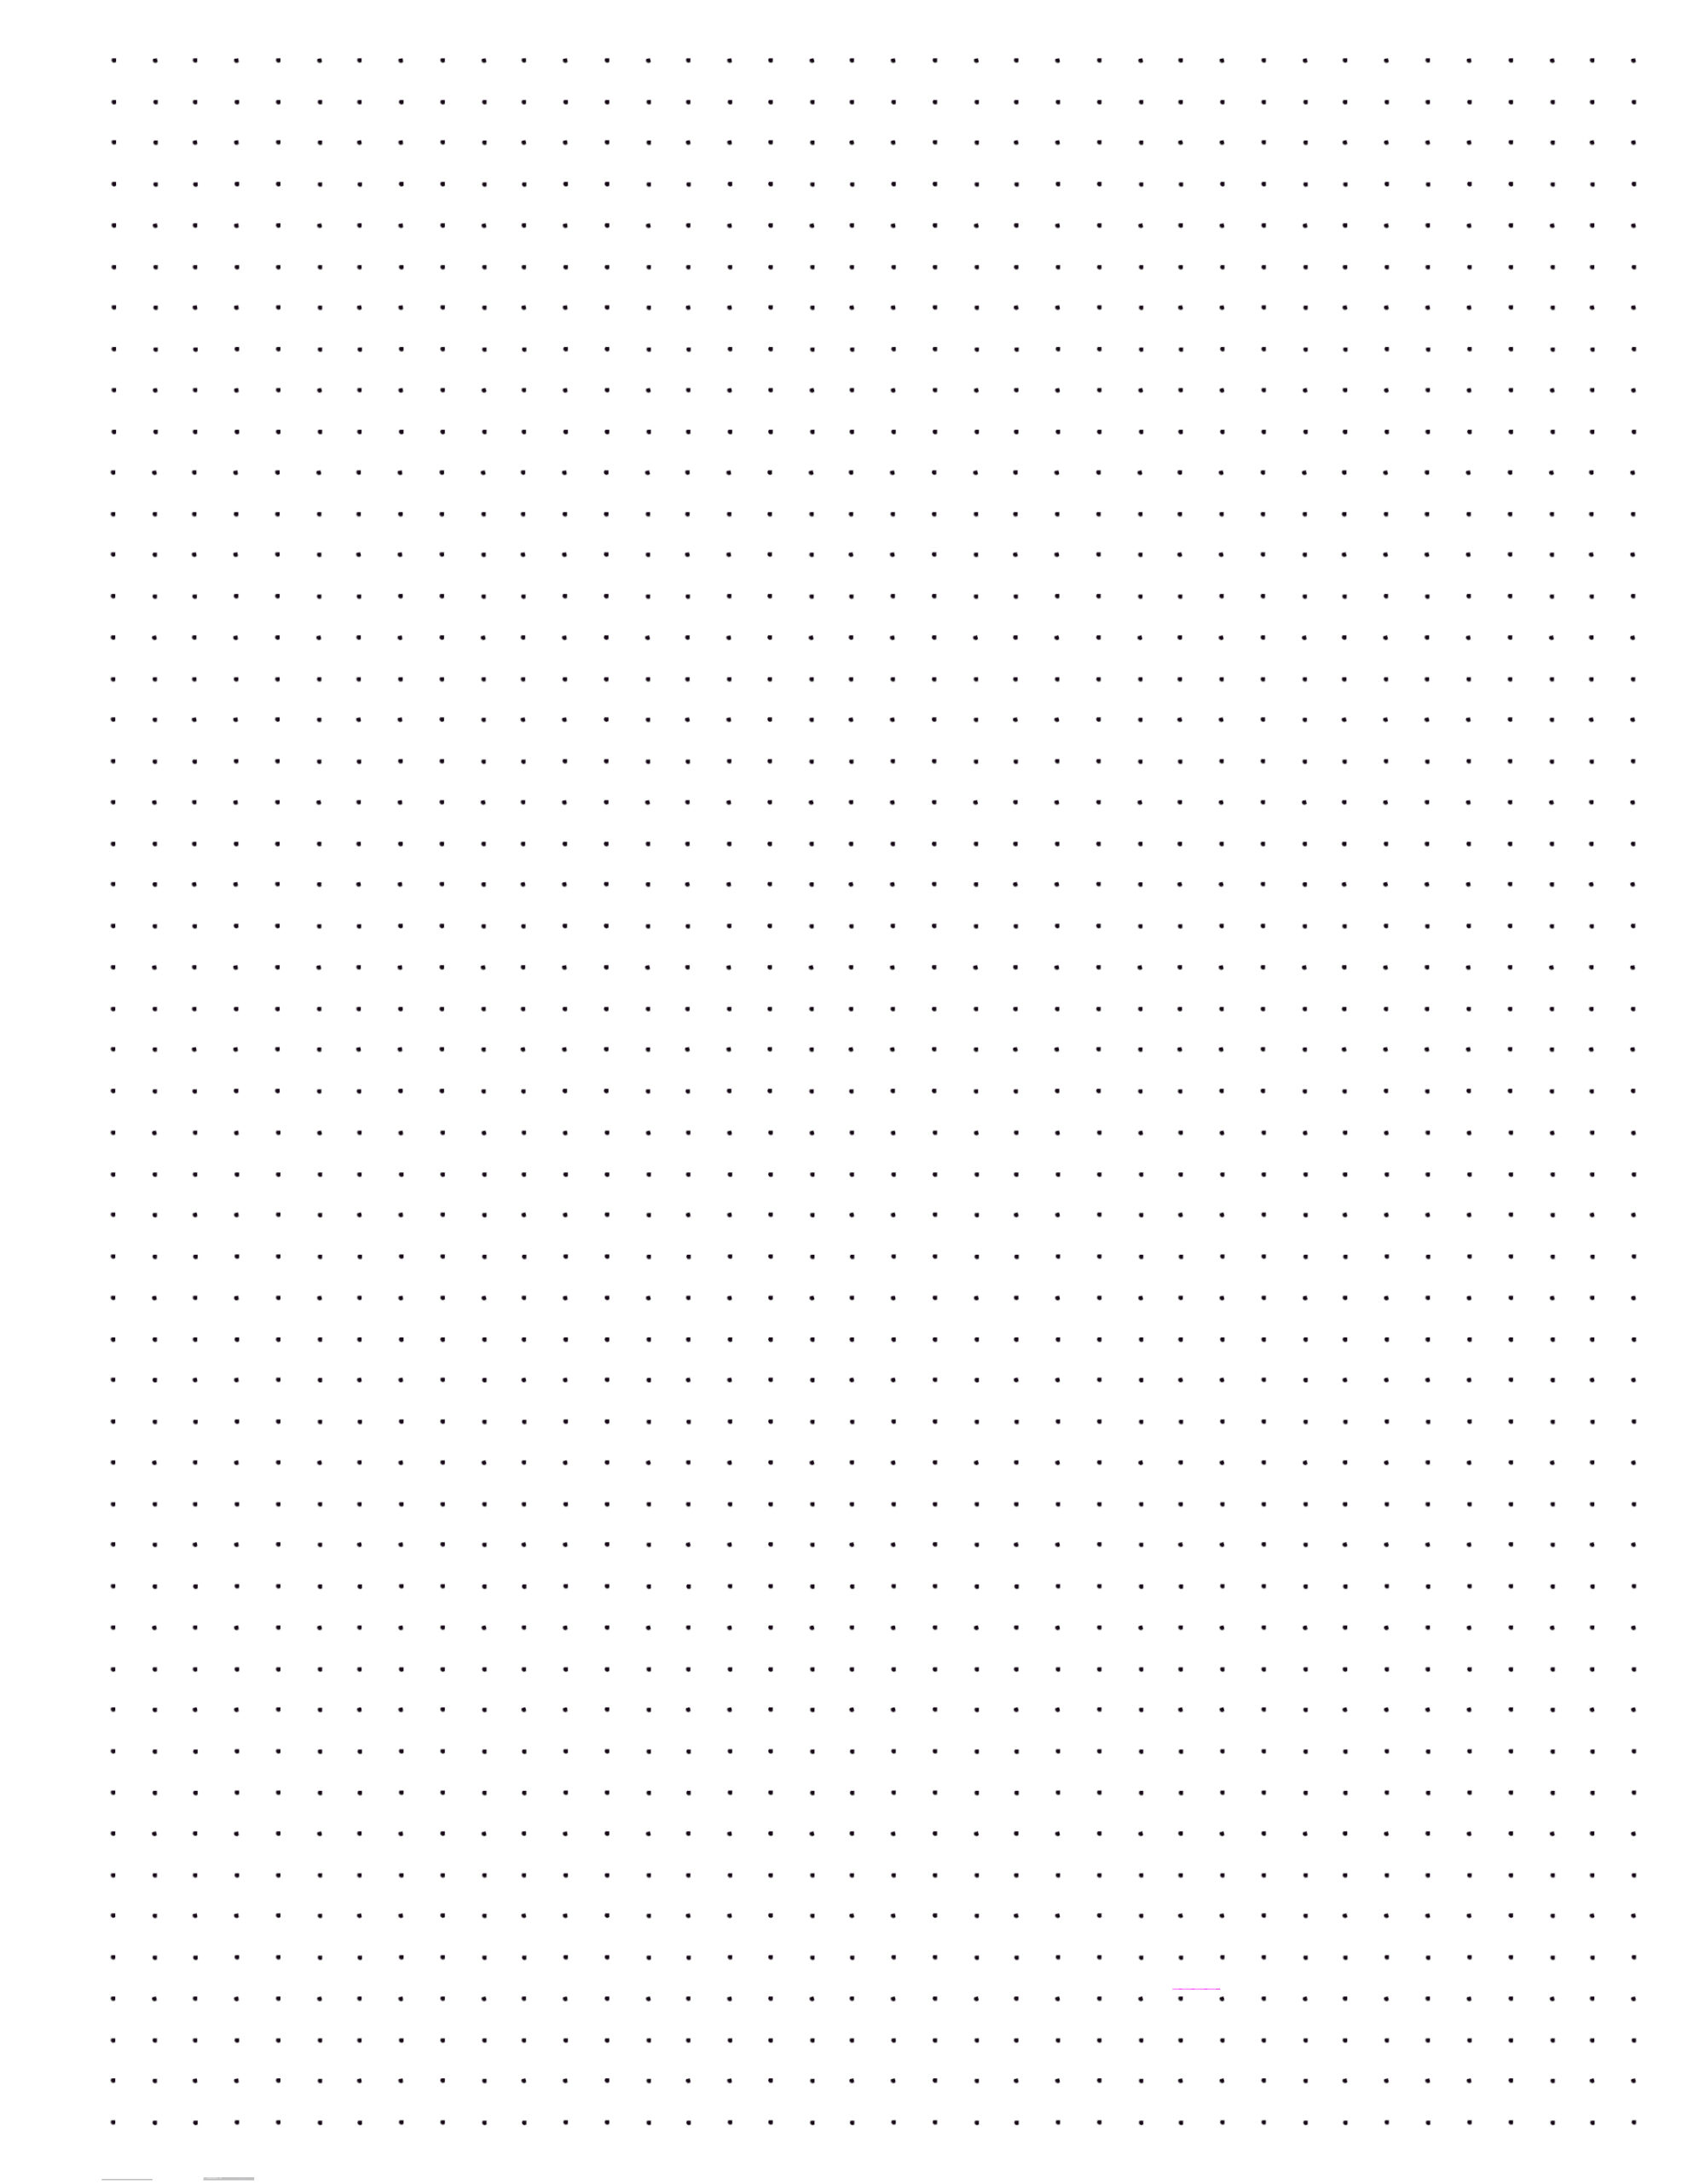 free-dot-grid-paper-printable